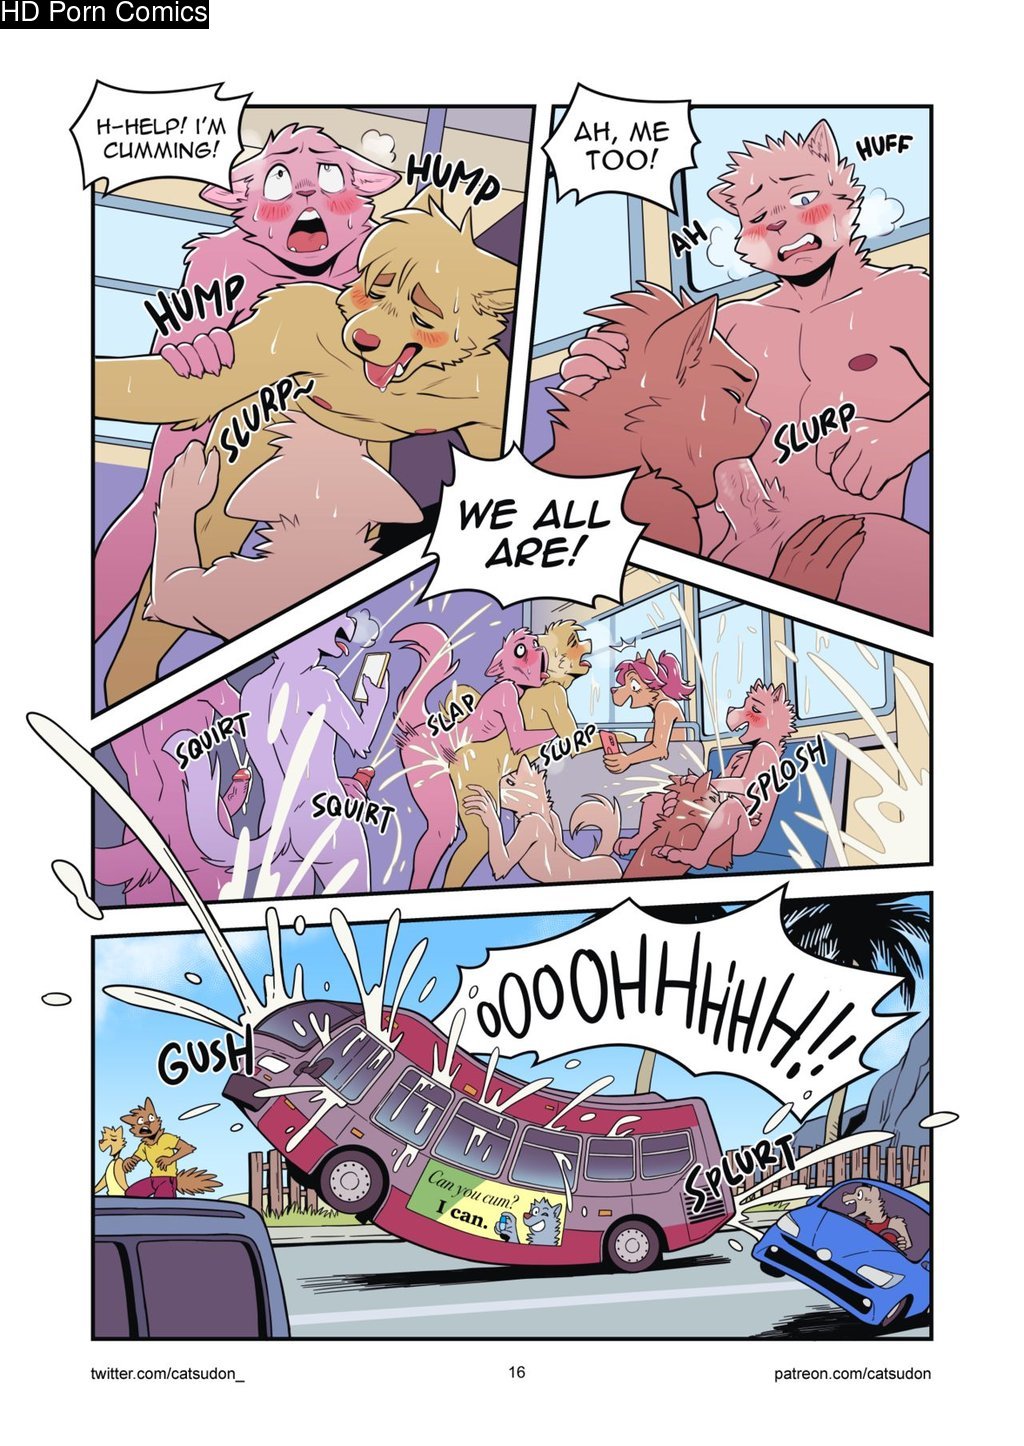 Furry Nude Beach - It's A Good Day To Go To The Nude Beach 1 & 2 comic porn â€“ HD Porn Comics